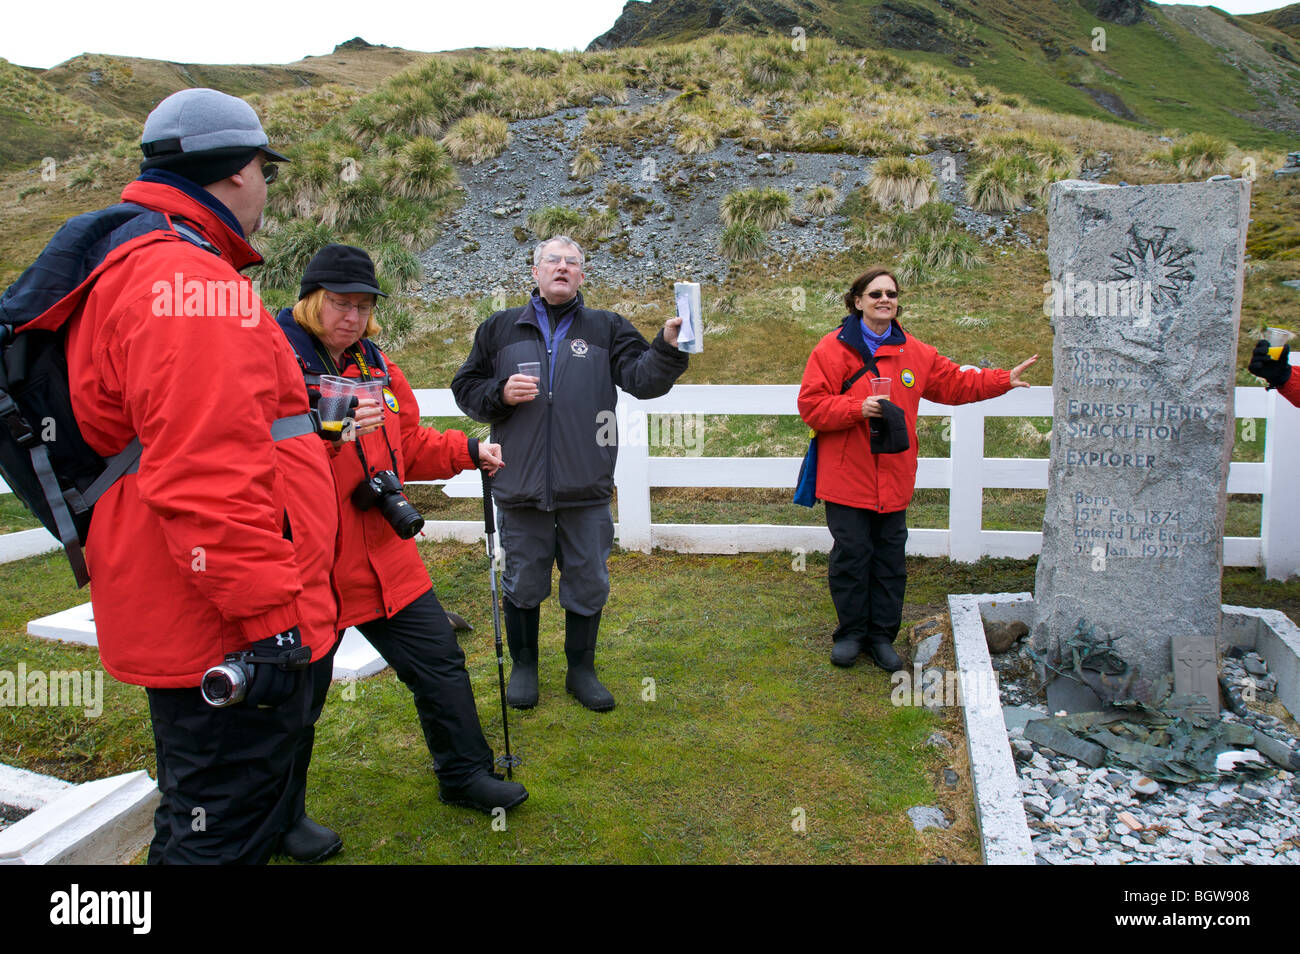 Adventurer Trevor Potts, toasting "The Boss", Sir Ernest Shackleton at his gravesite, Grytviken, Soth Georgia Island. Stock Photo